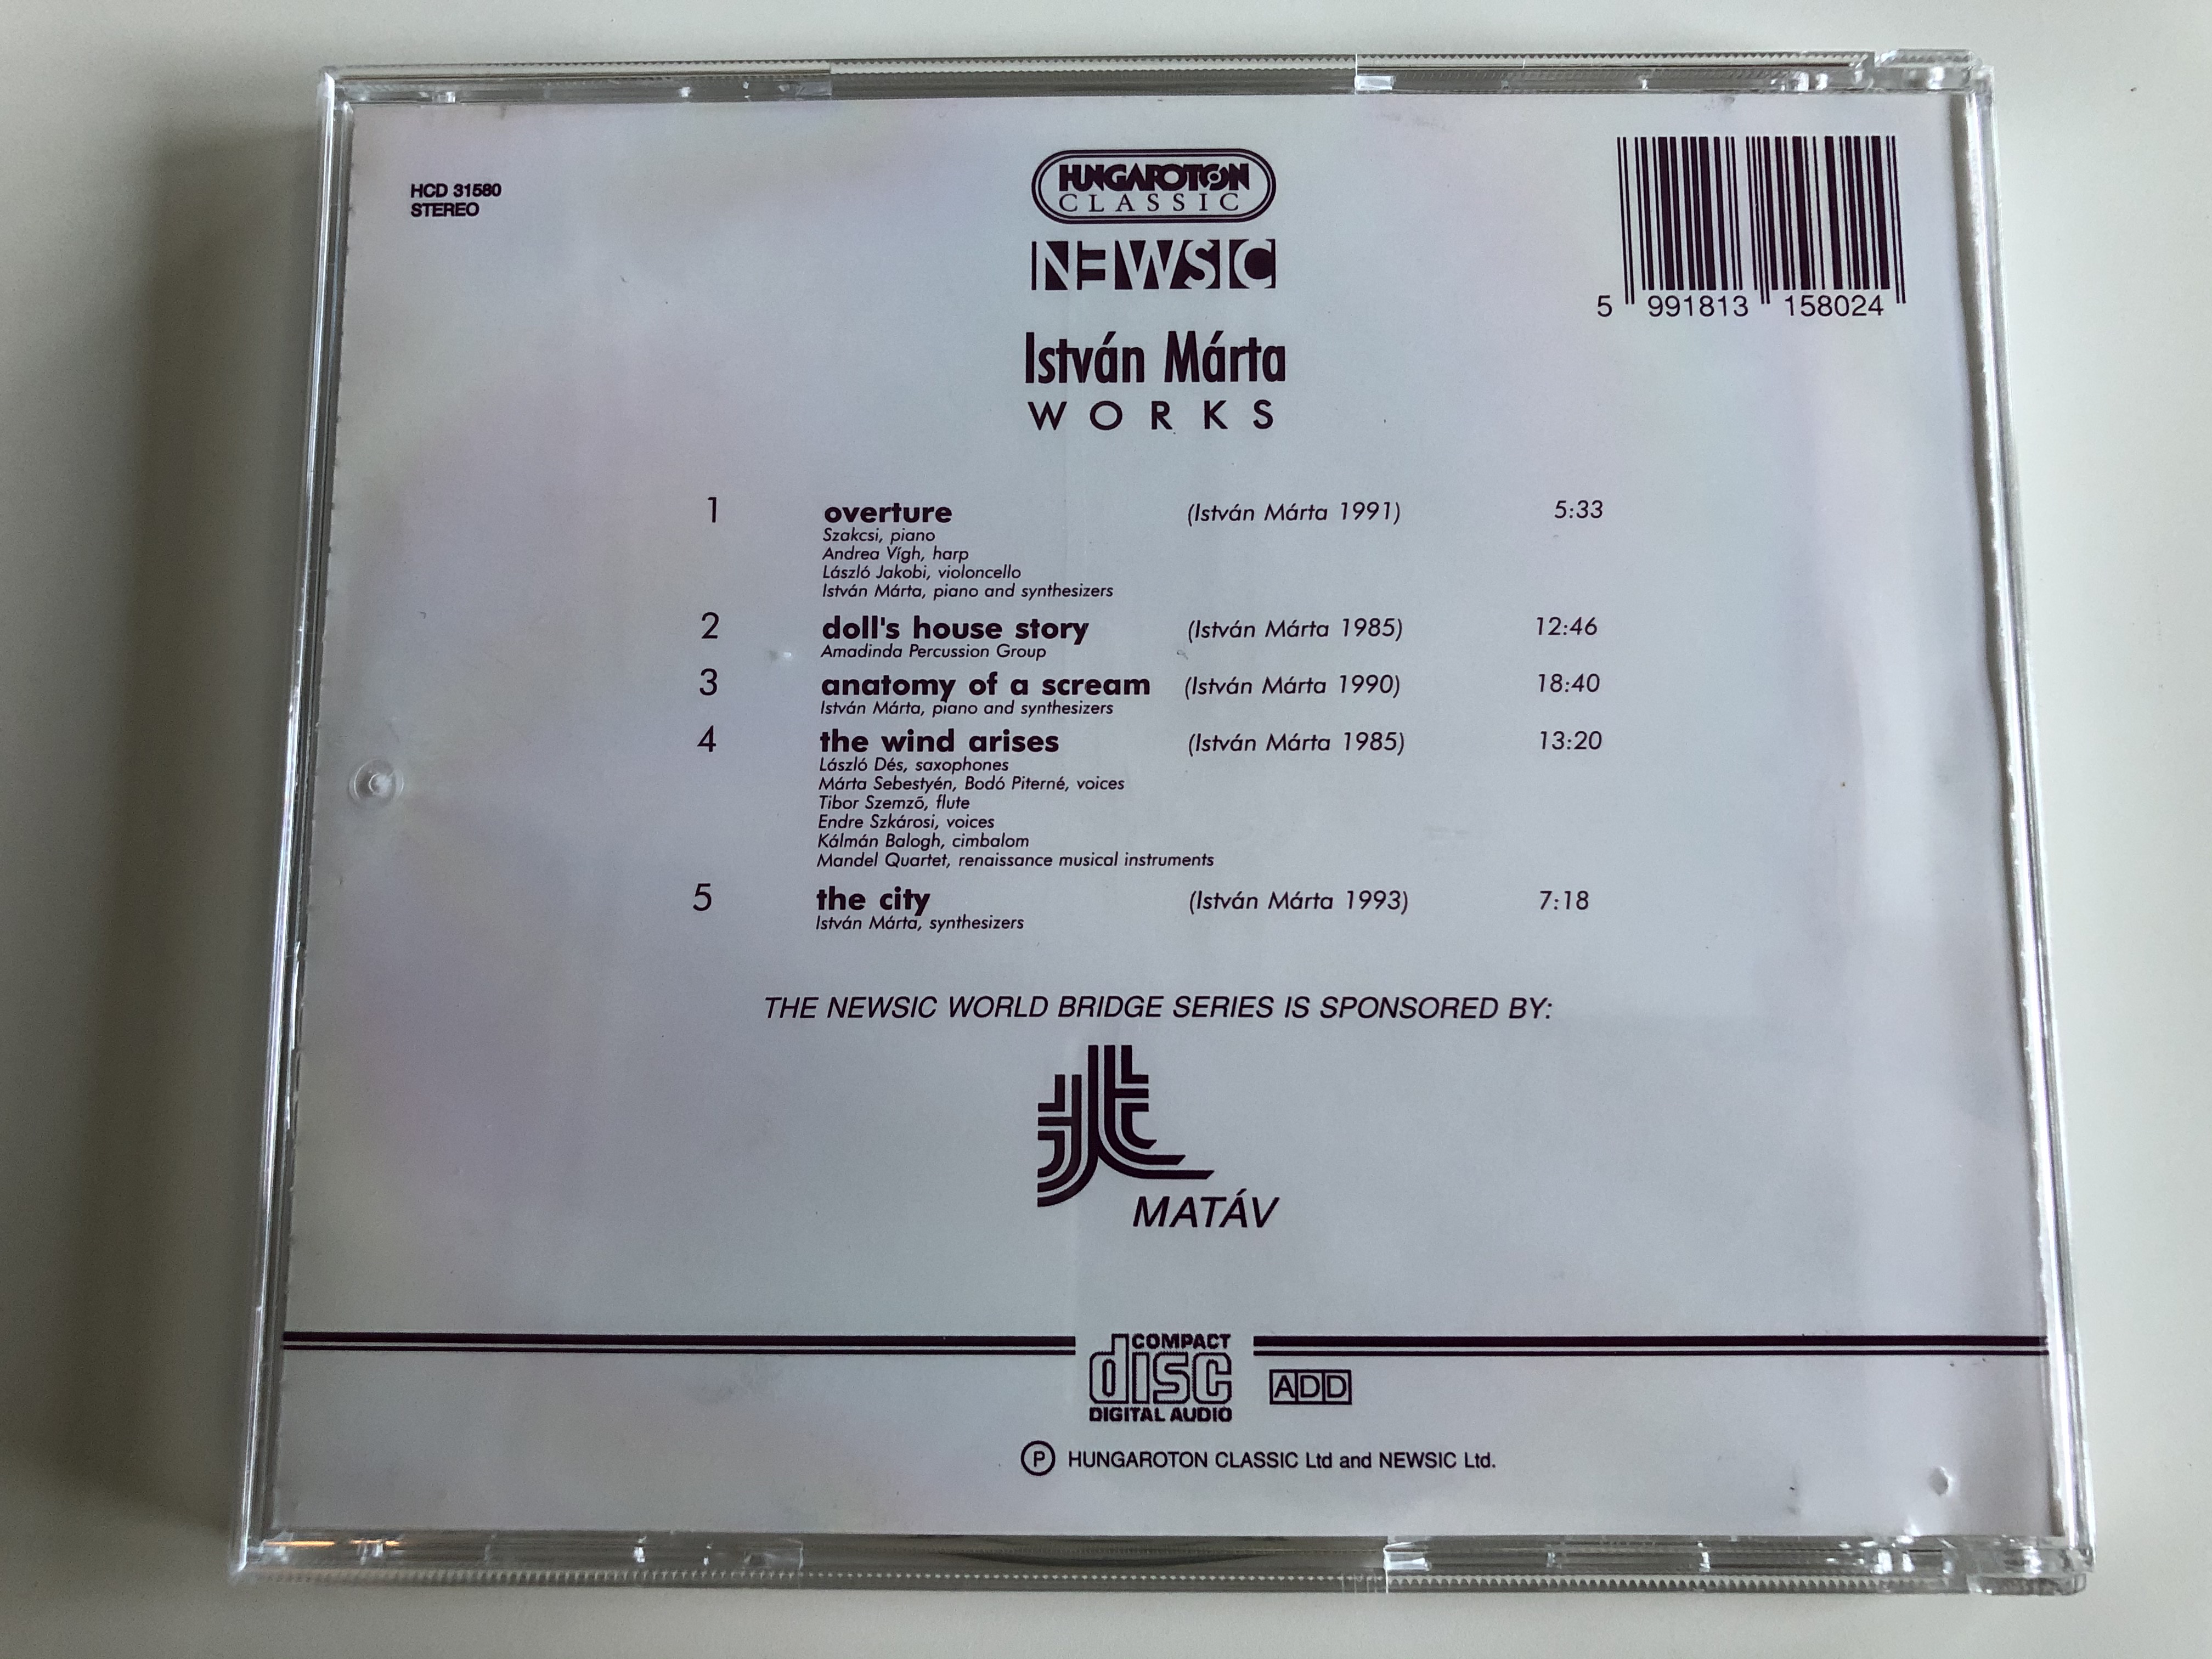 istv-n-m-rta-works-hungaroton-classic-audio-cd-1994-stereo-hcd-31580-6-.jpg